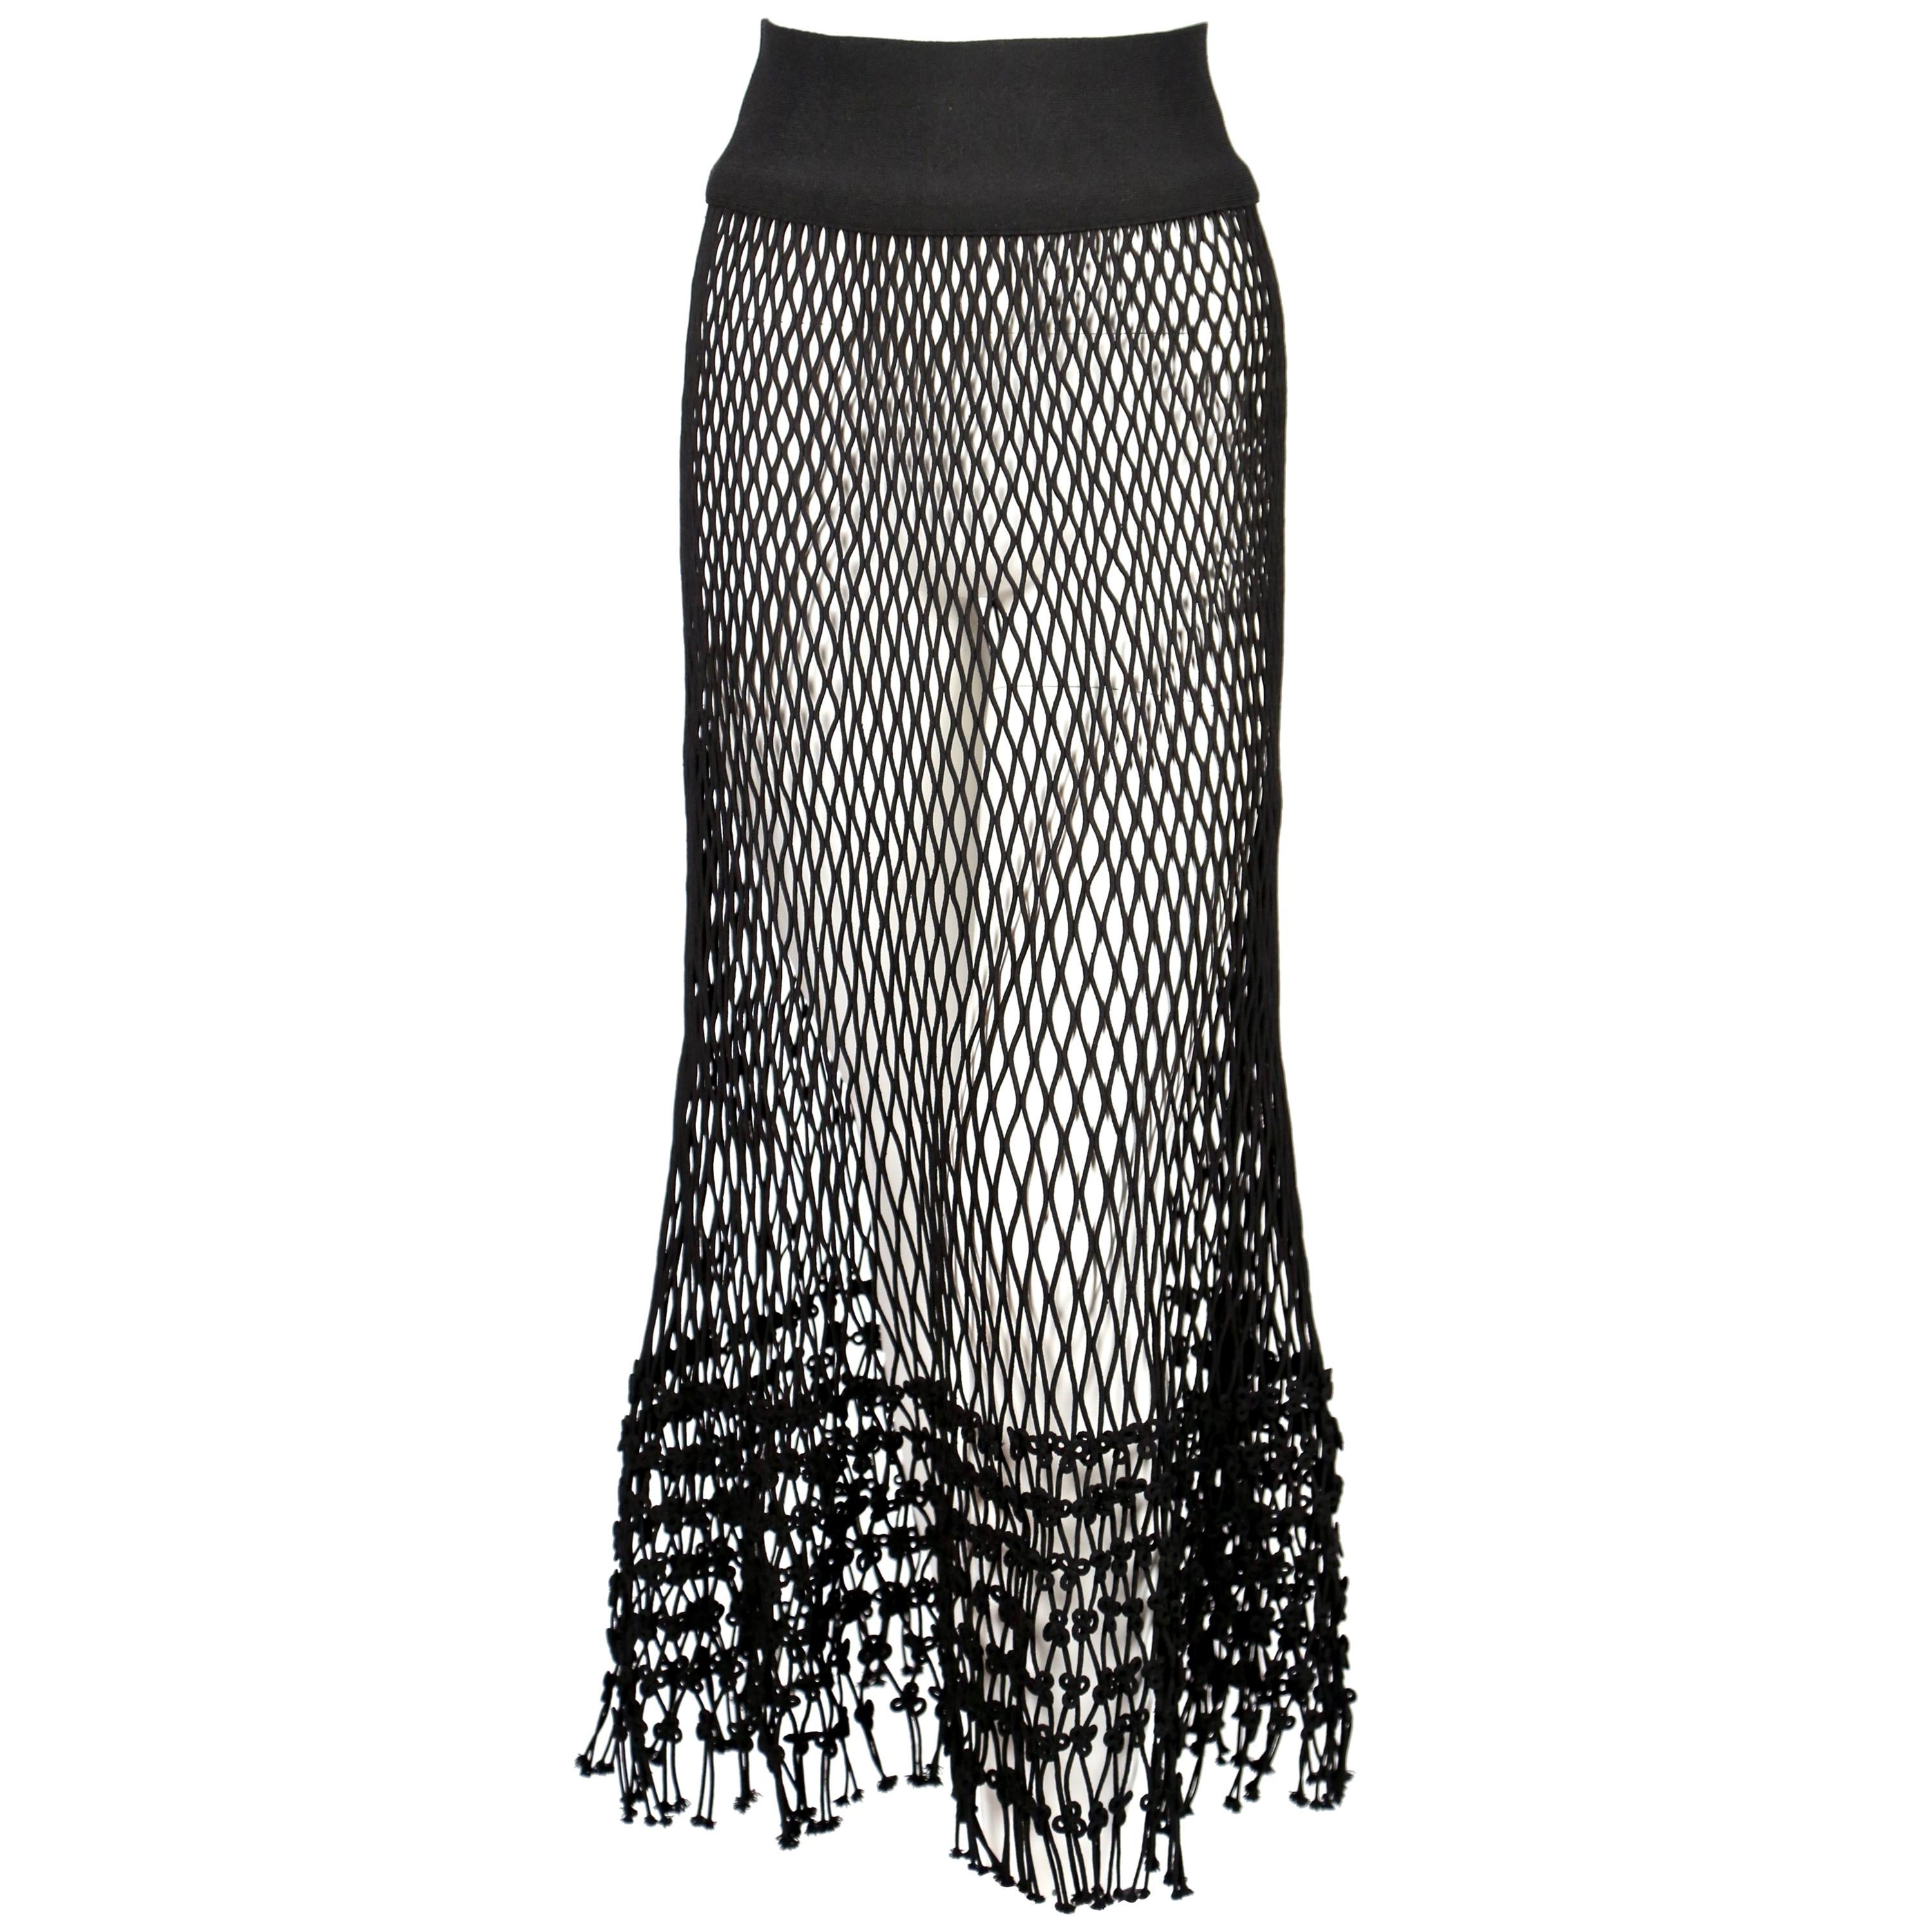 2014 CELINE by PHOEBE PHILO black net runway skirt - new